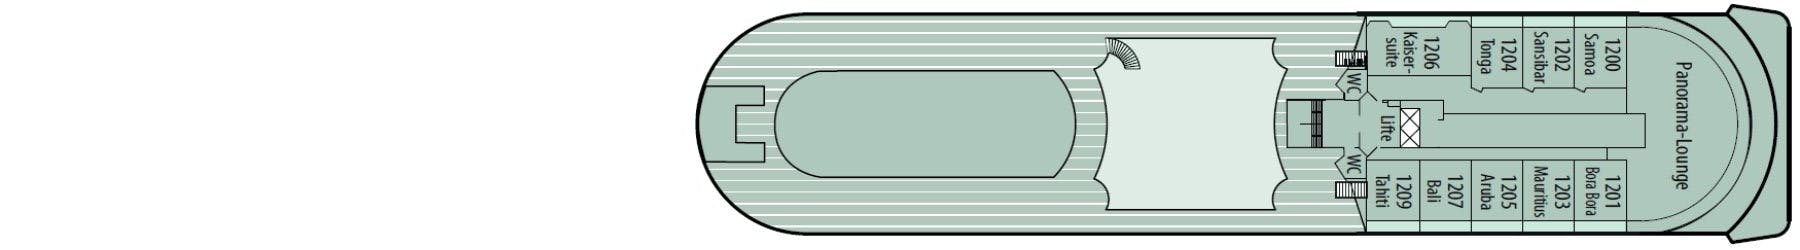 MS Amera - Phoenix Seereisen - Deck 8 (Panorama-Deck)